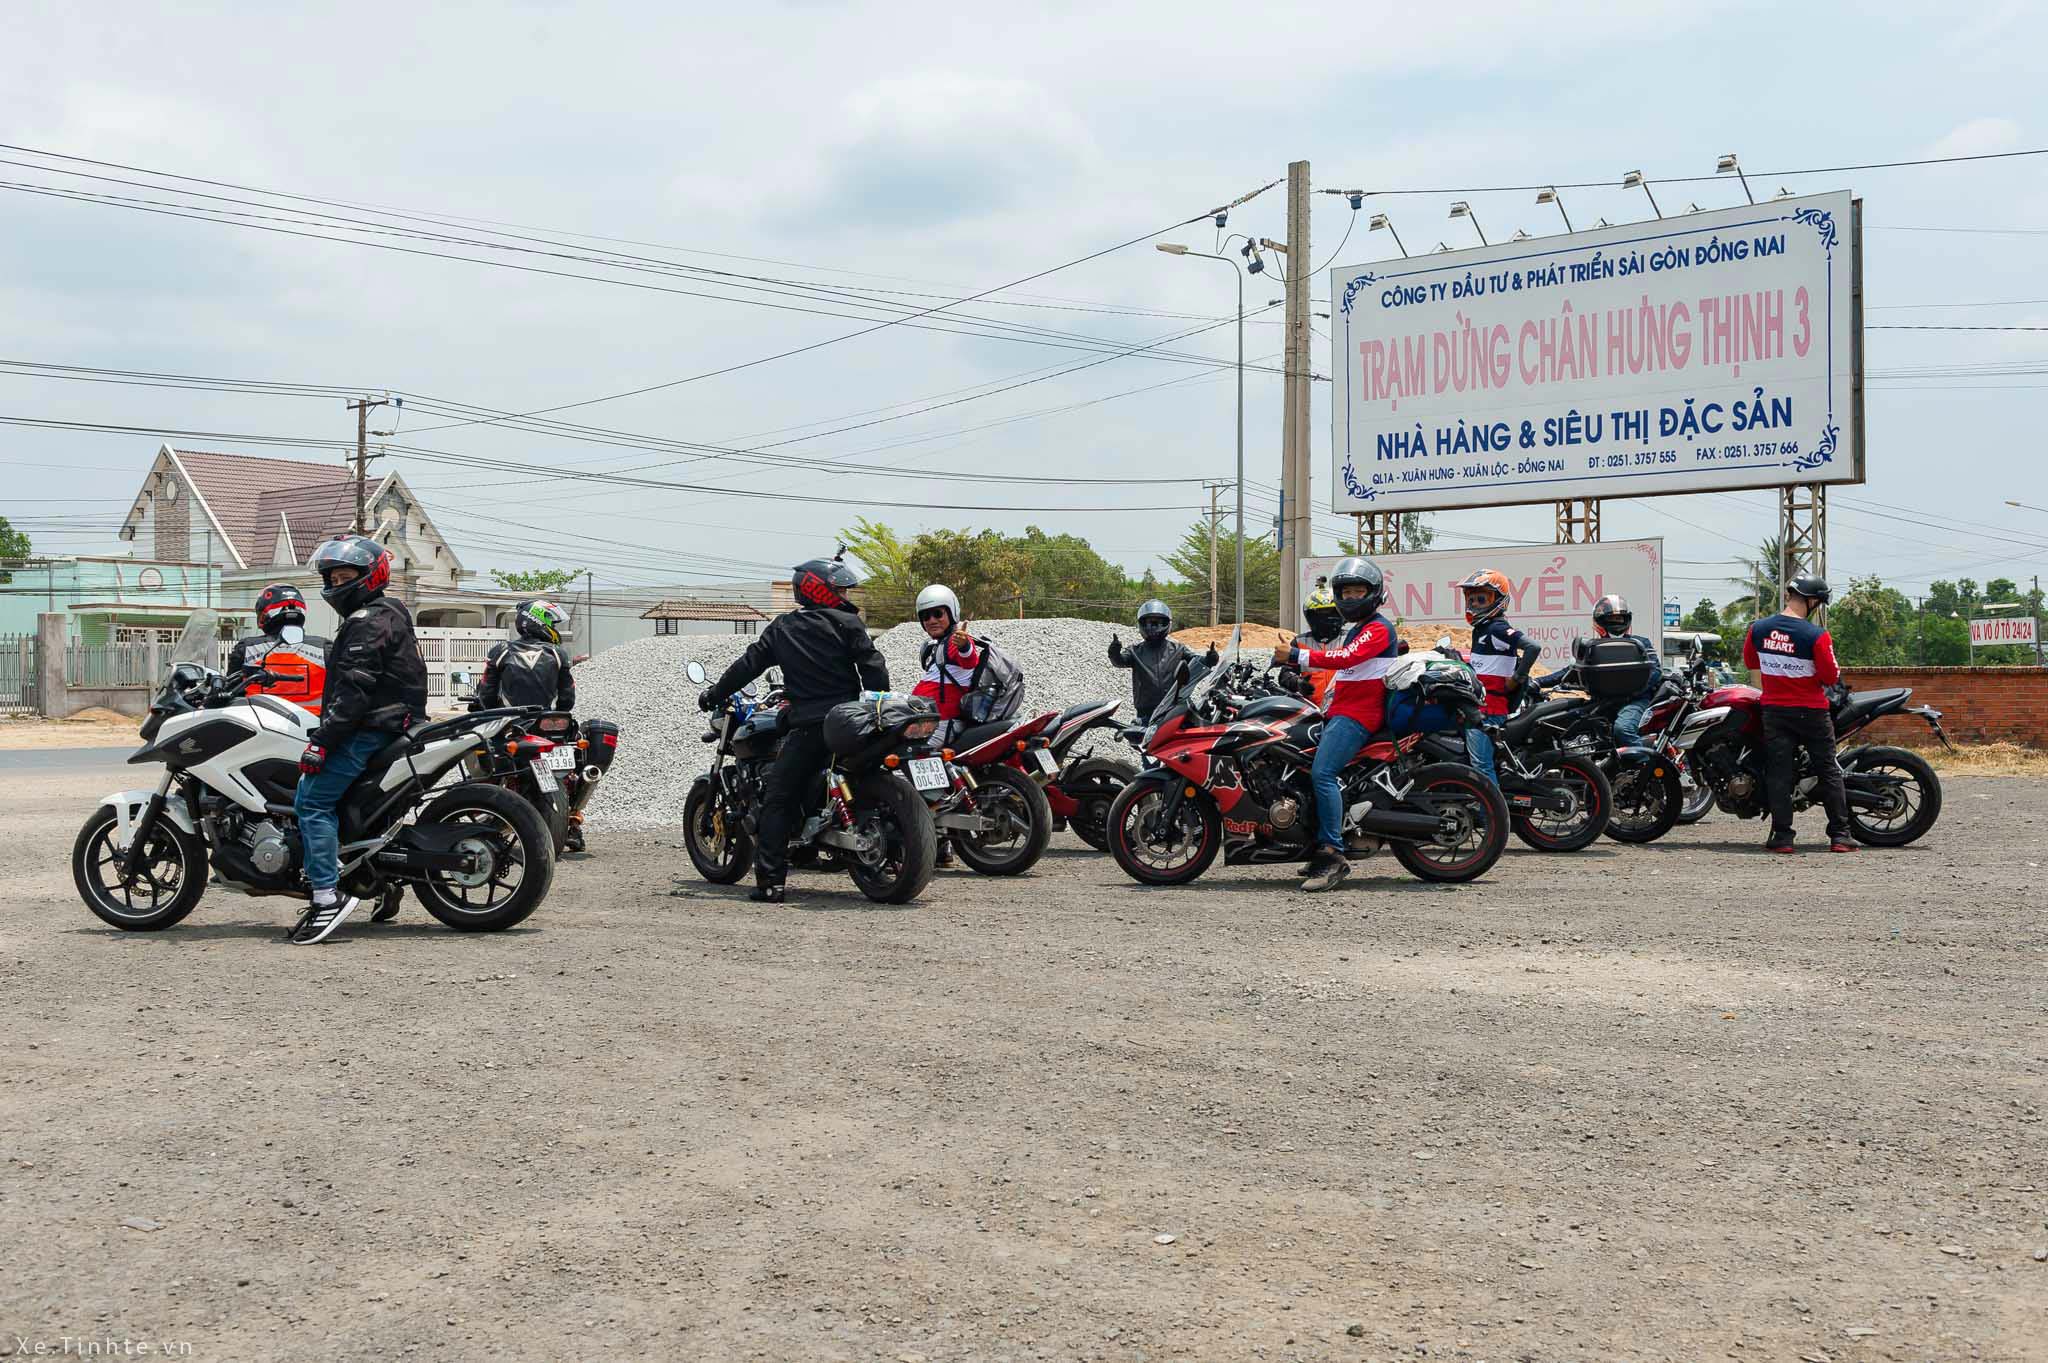 Honda_biker_day_2019_Saigon_Phanthiet (53).jpg